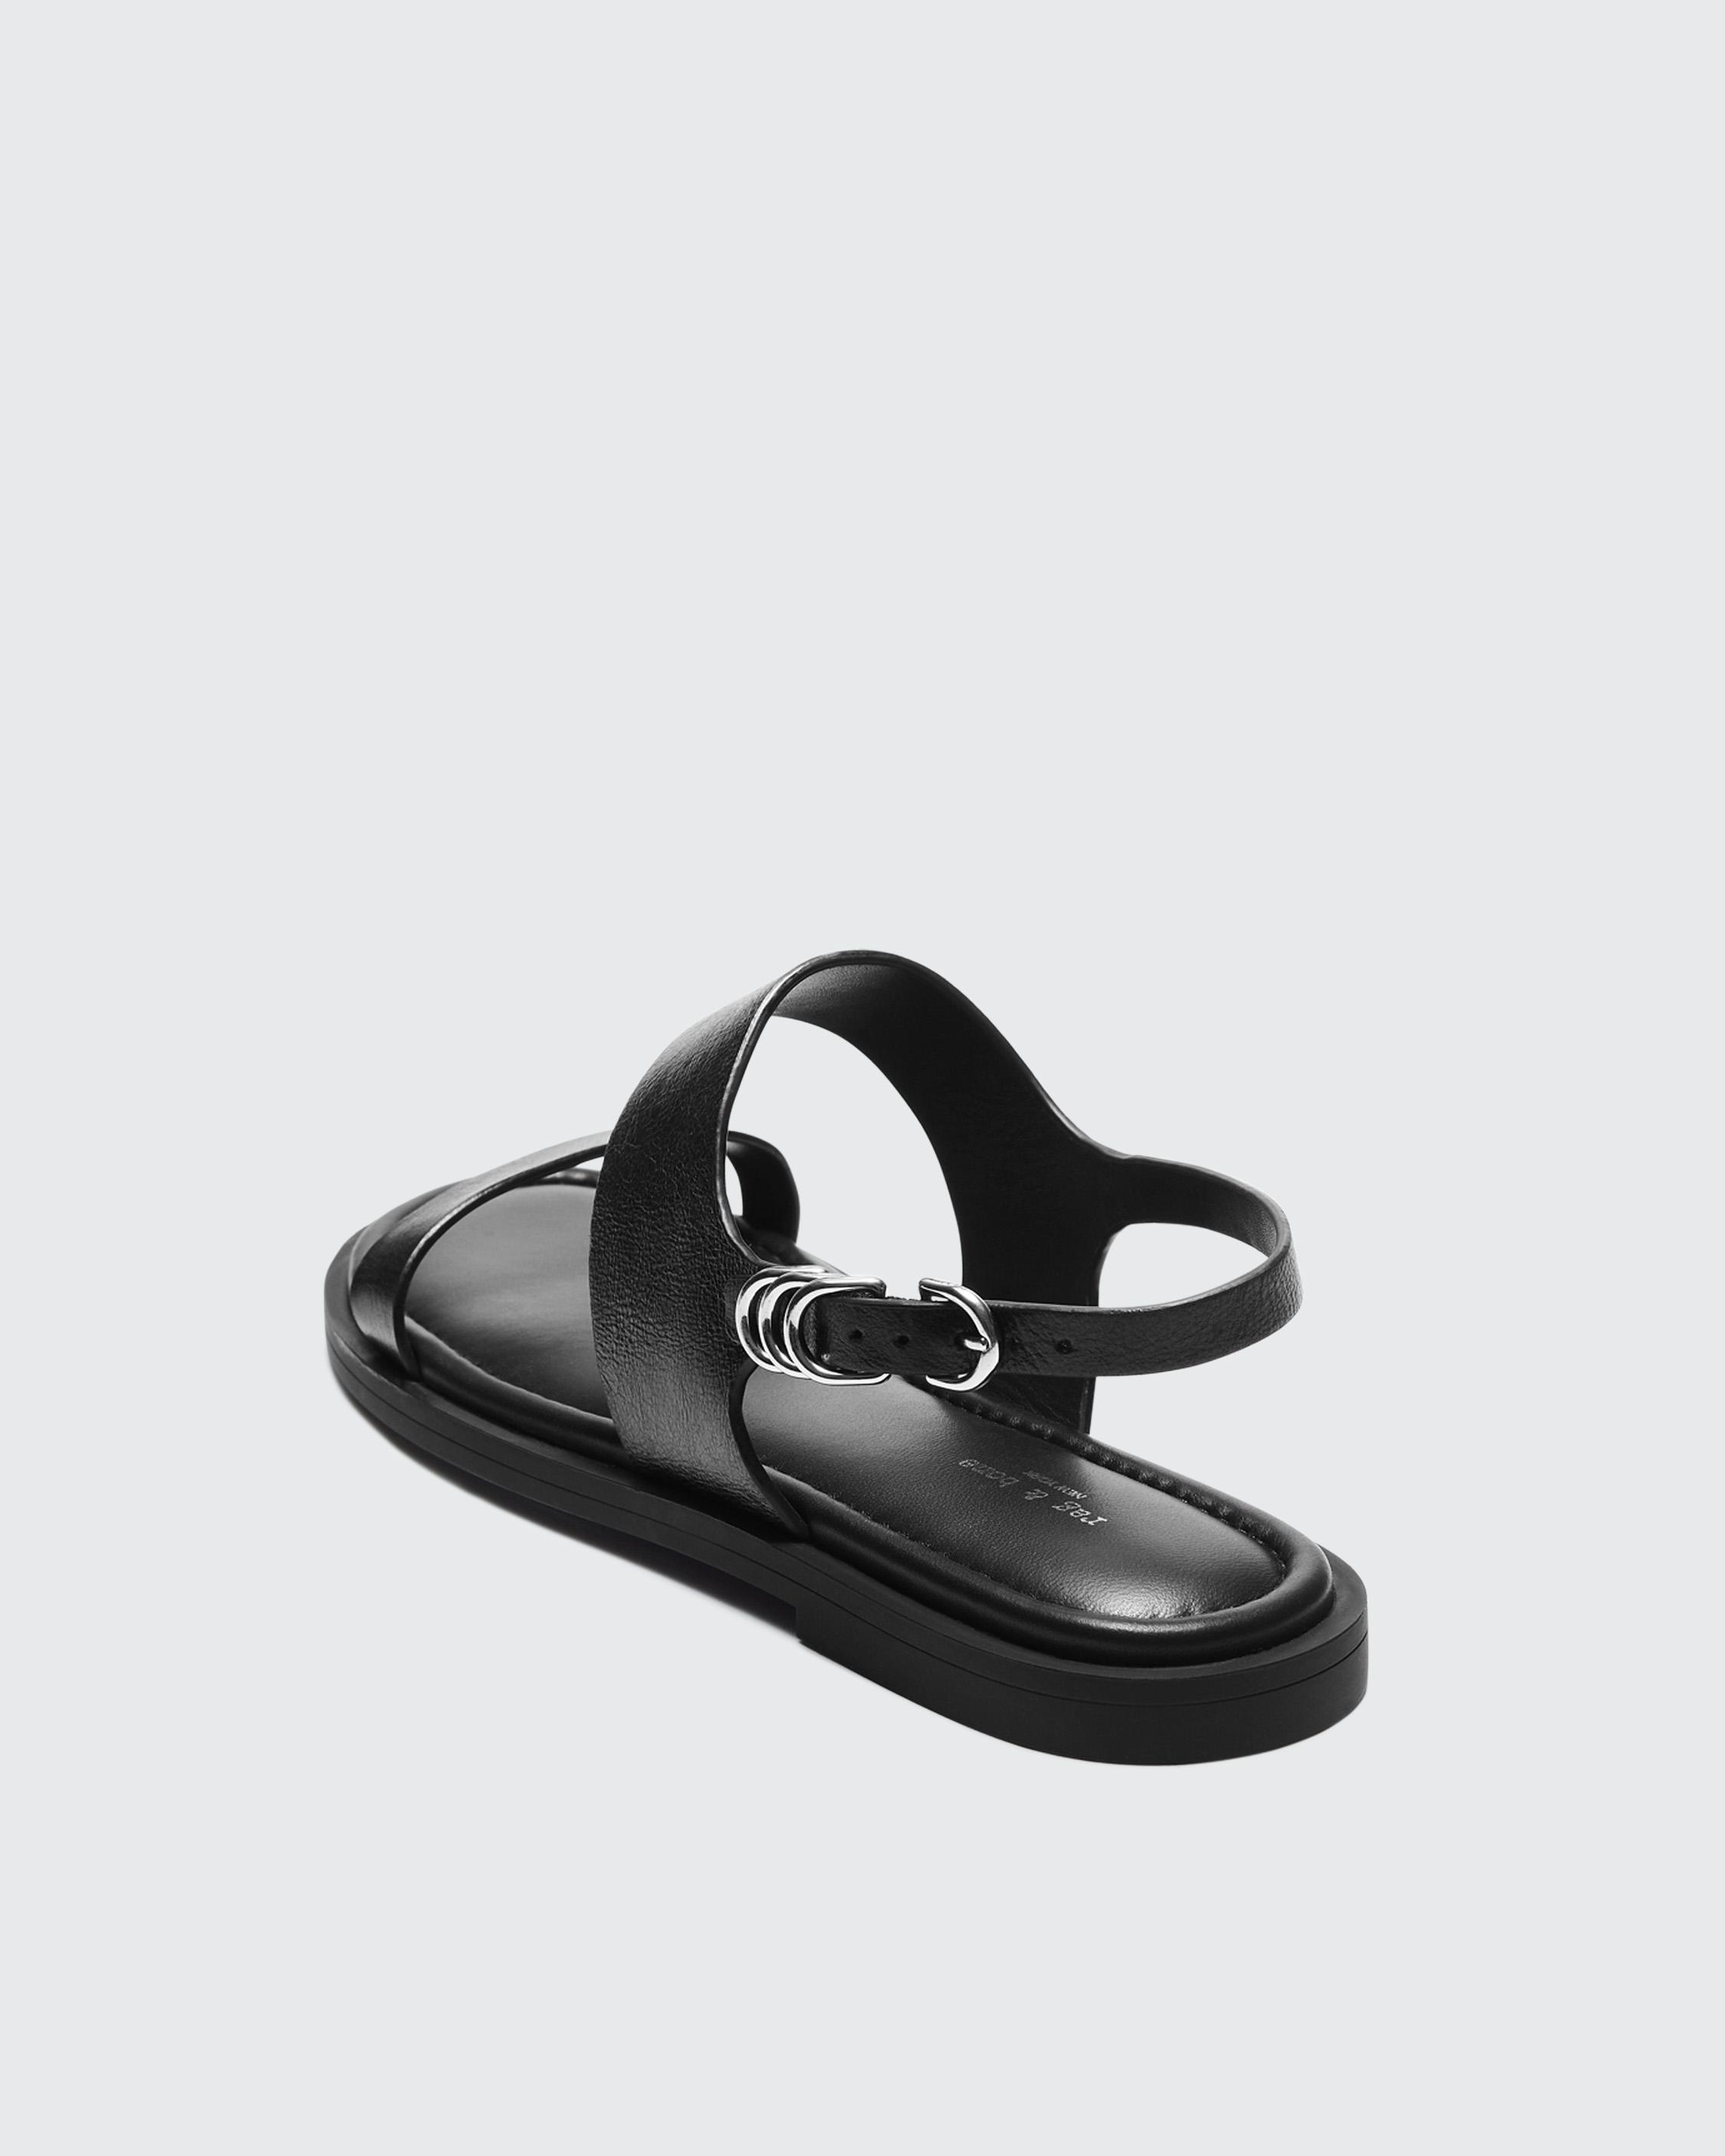 Geo Sandal - Leather
Flat Sandal - 5